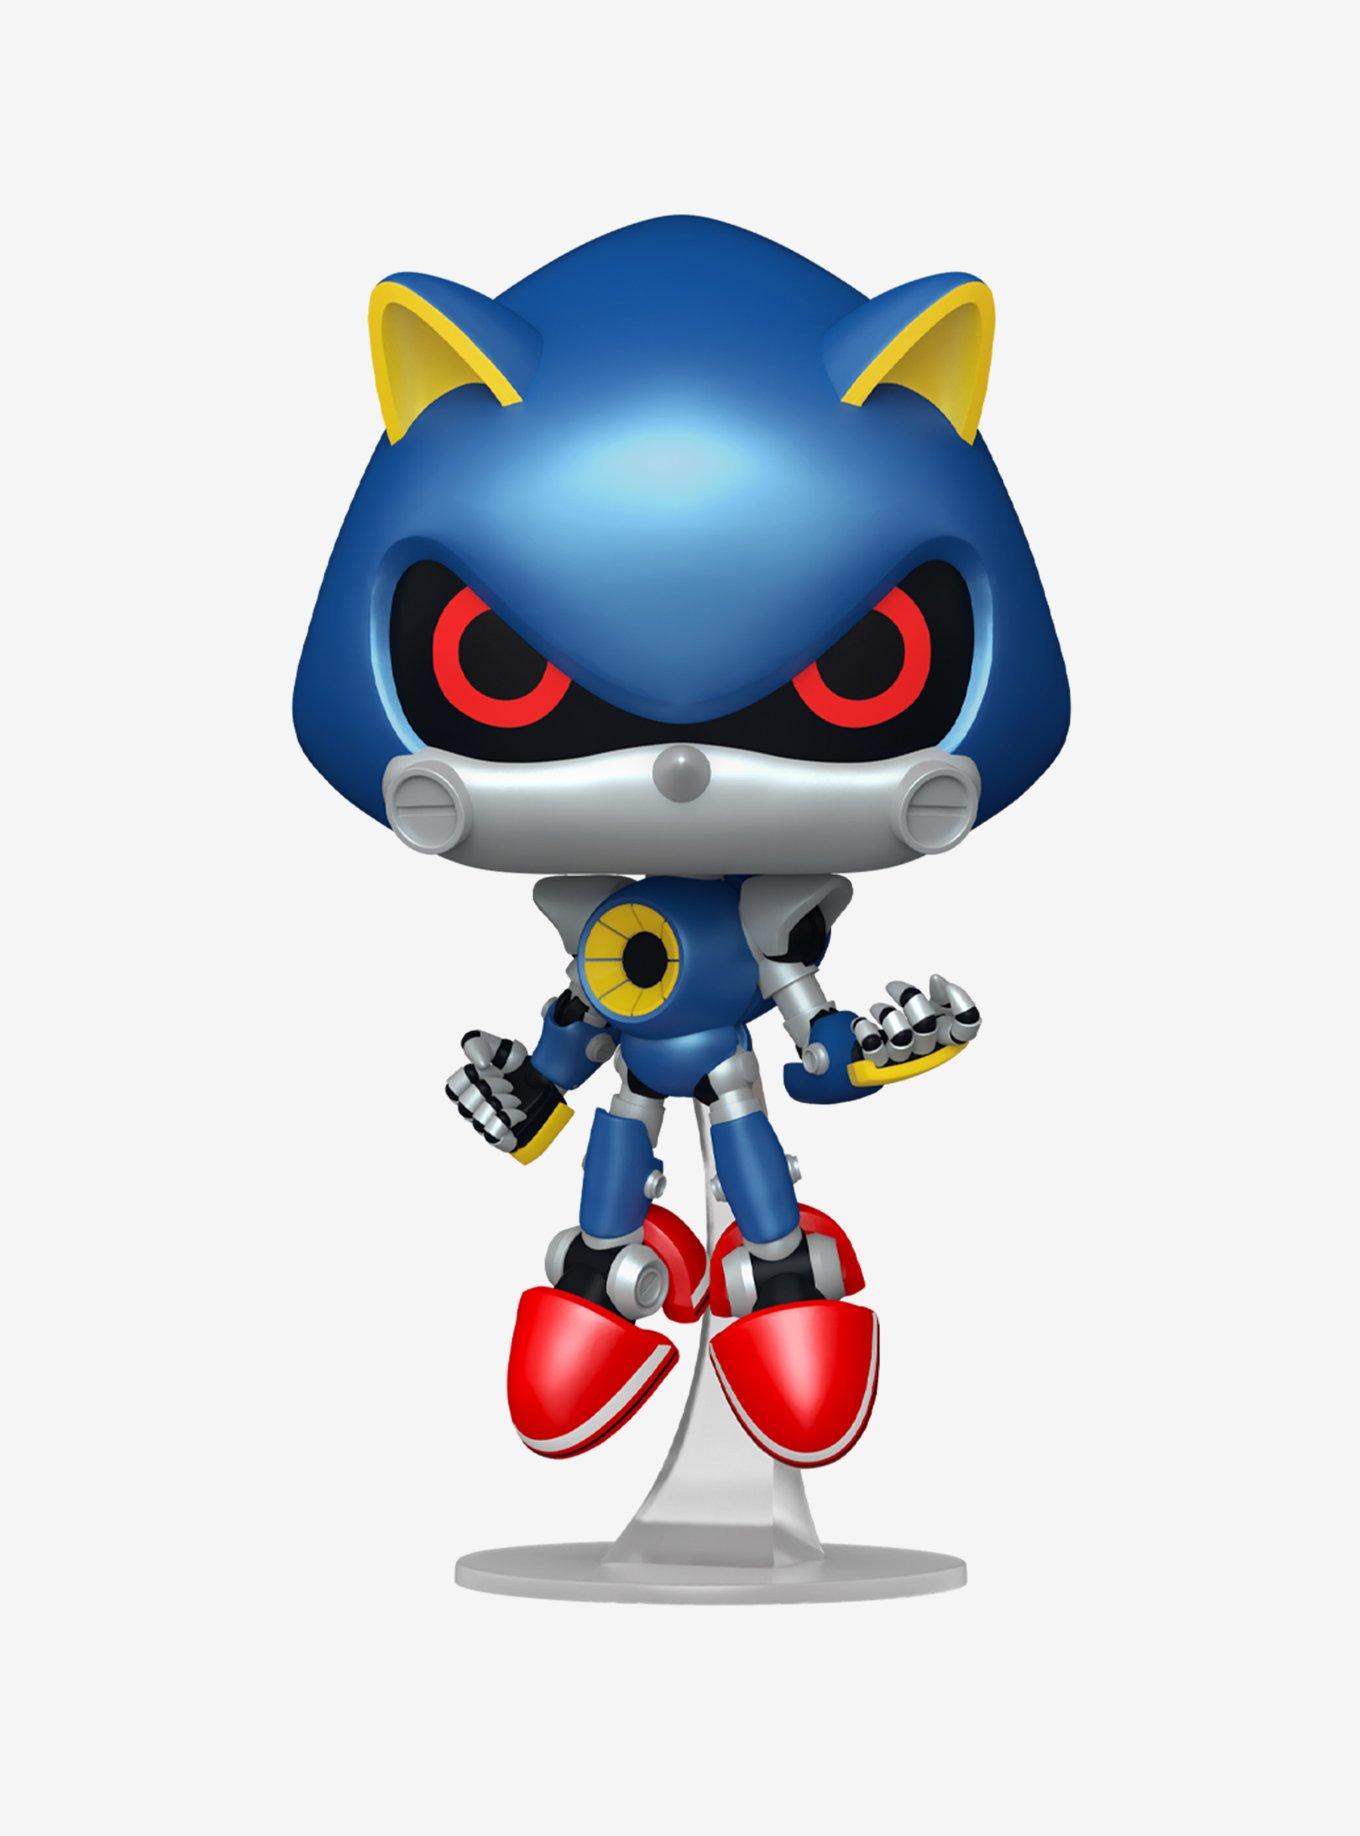 Funko Sonic The Hedgehog Pop! Games Metal Sonic Vinyl Figure